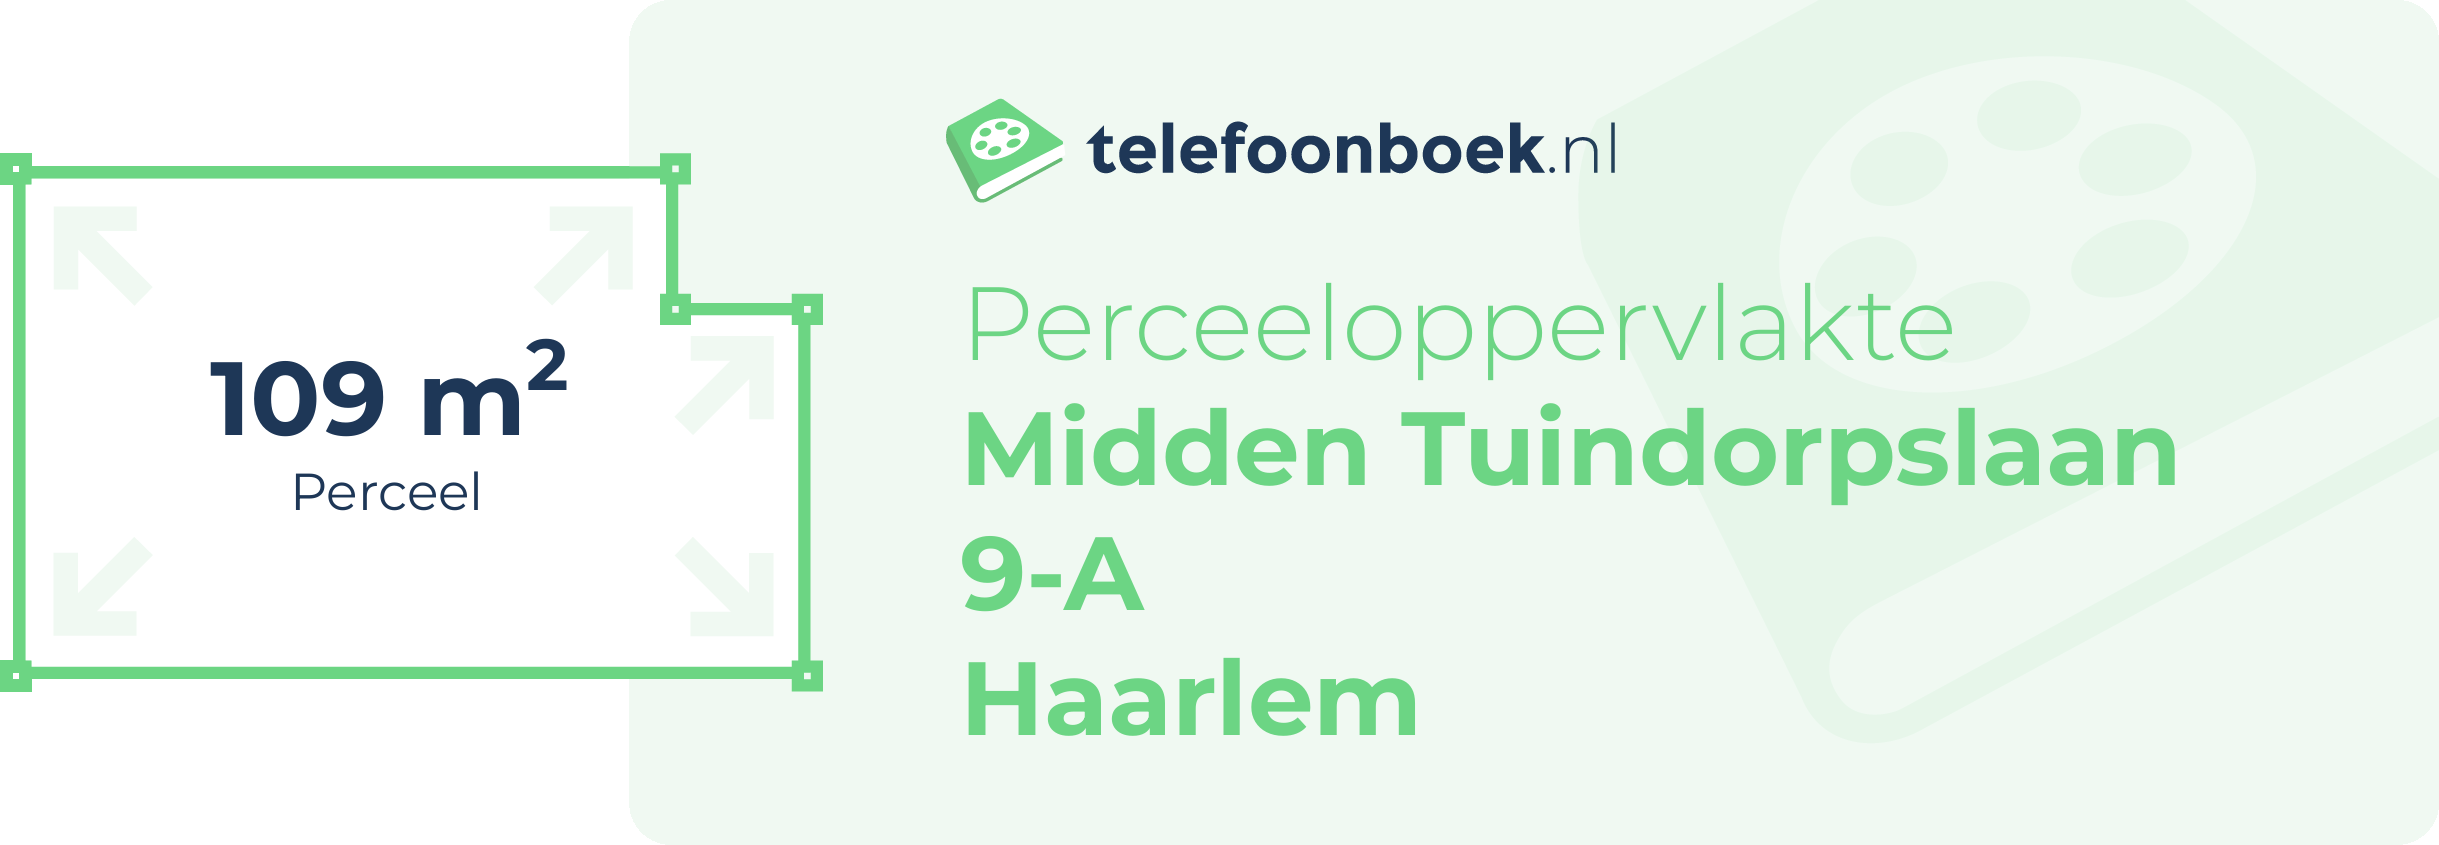 Perceeloppervlakte Midden Tuindorpslaan 9-A Haarlem